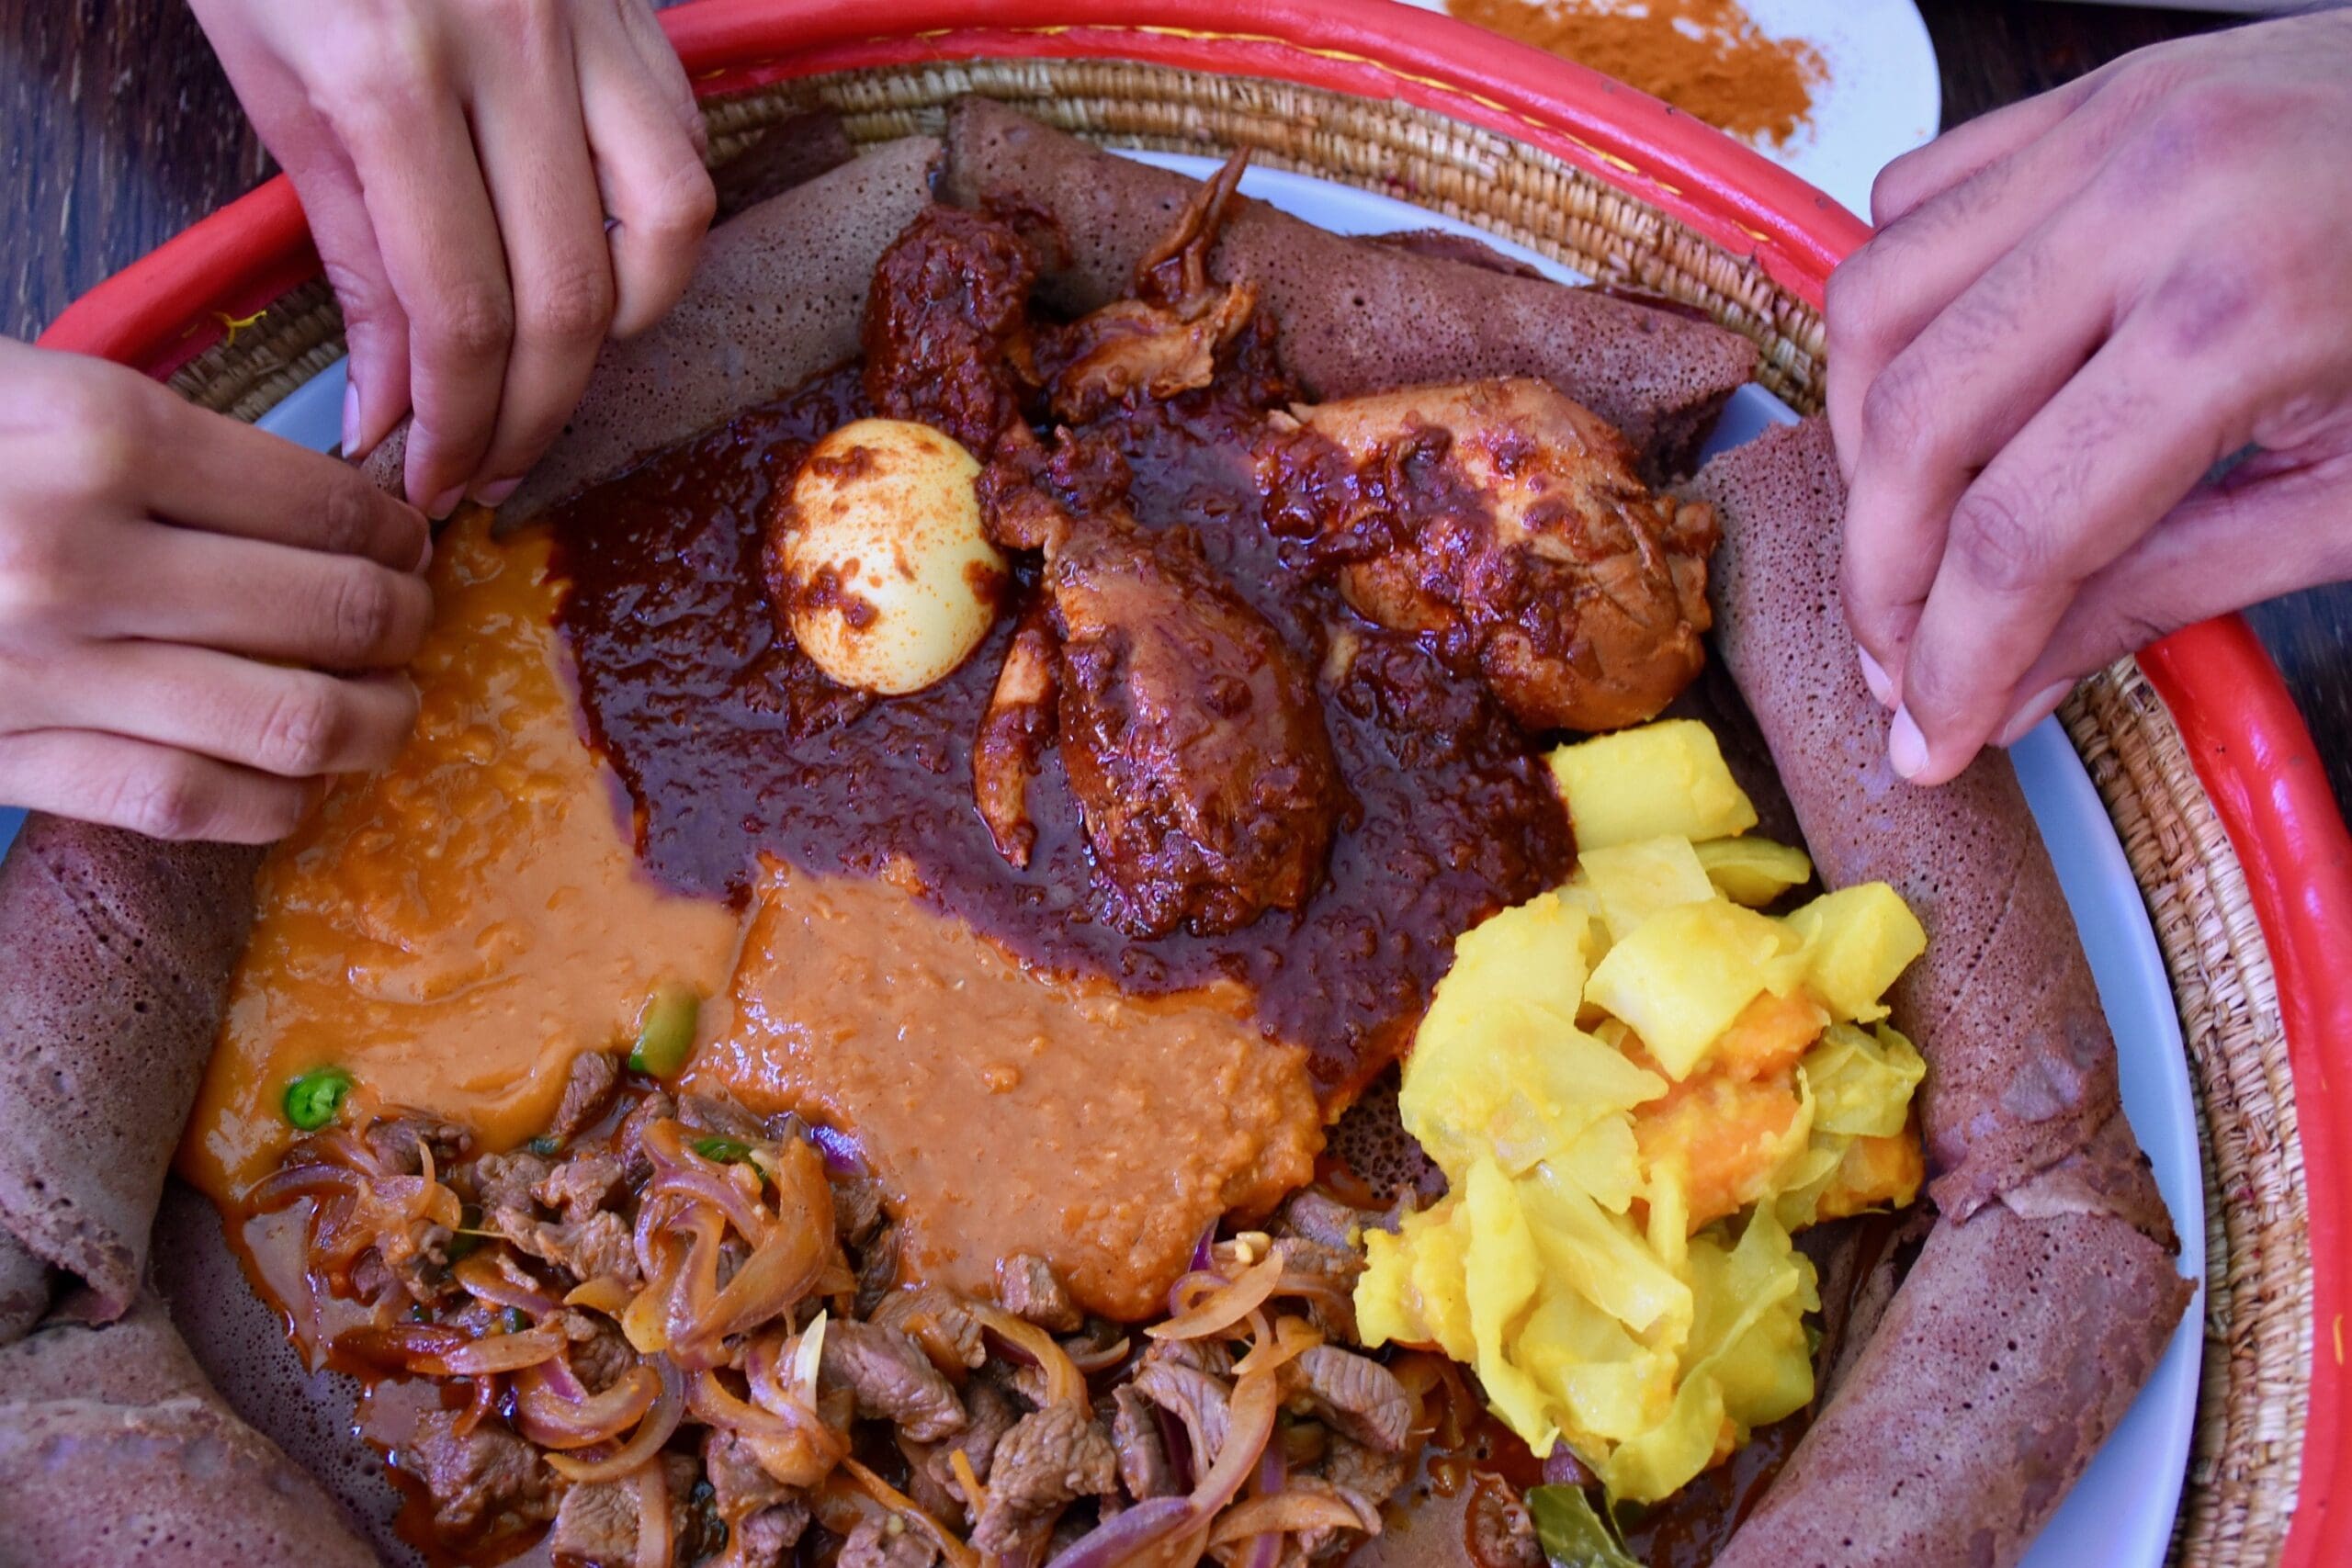 african-cuisine-communal-eating-culture